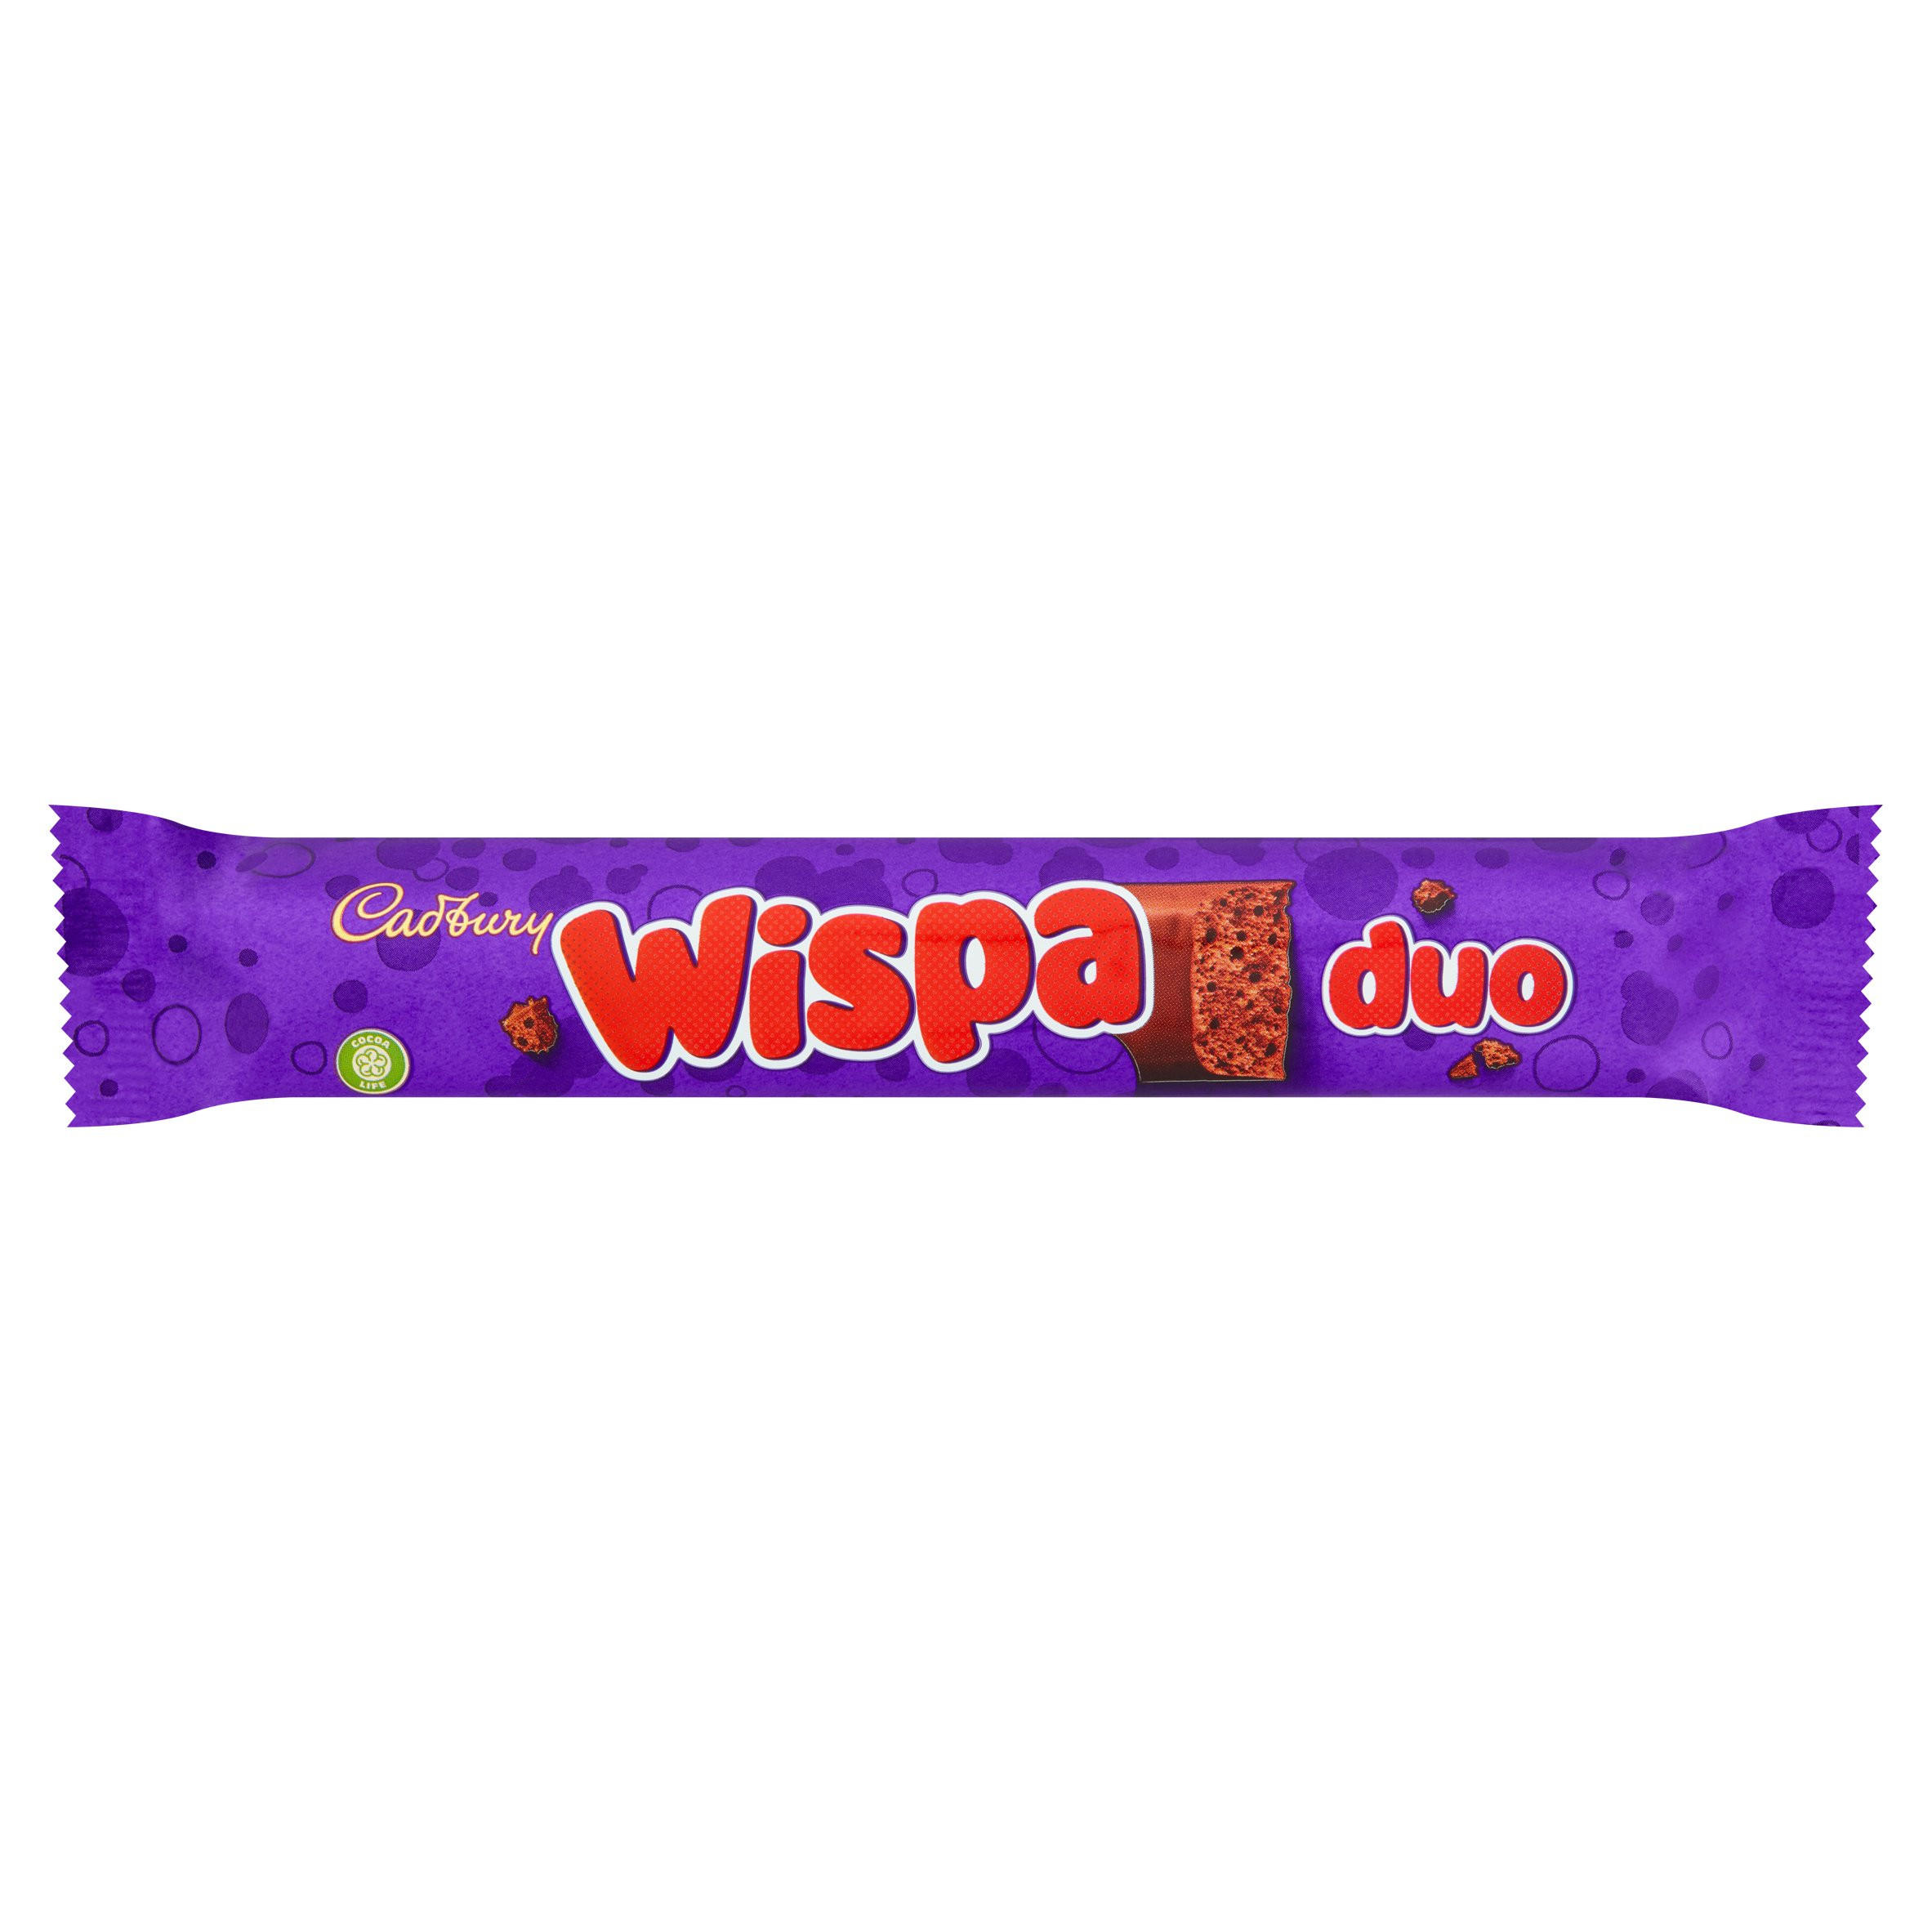 Cadbury Wispa Duo Chocolate Bar 47 4g Single Chocolate Bars And Bags Iceland Foods